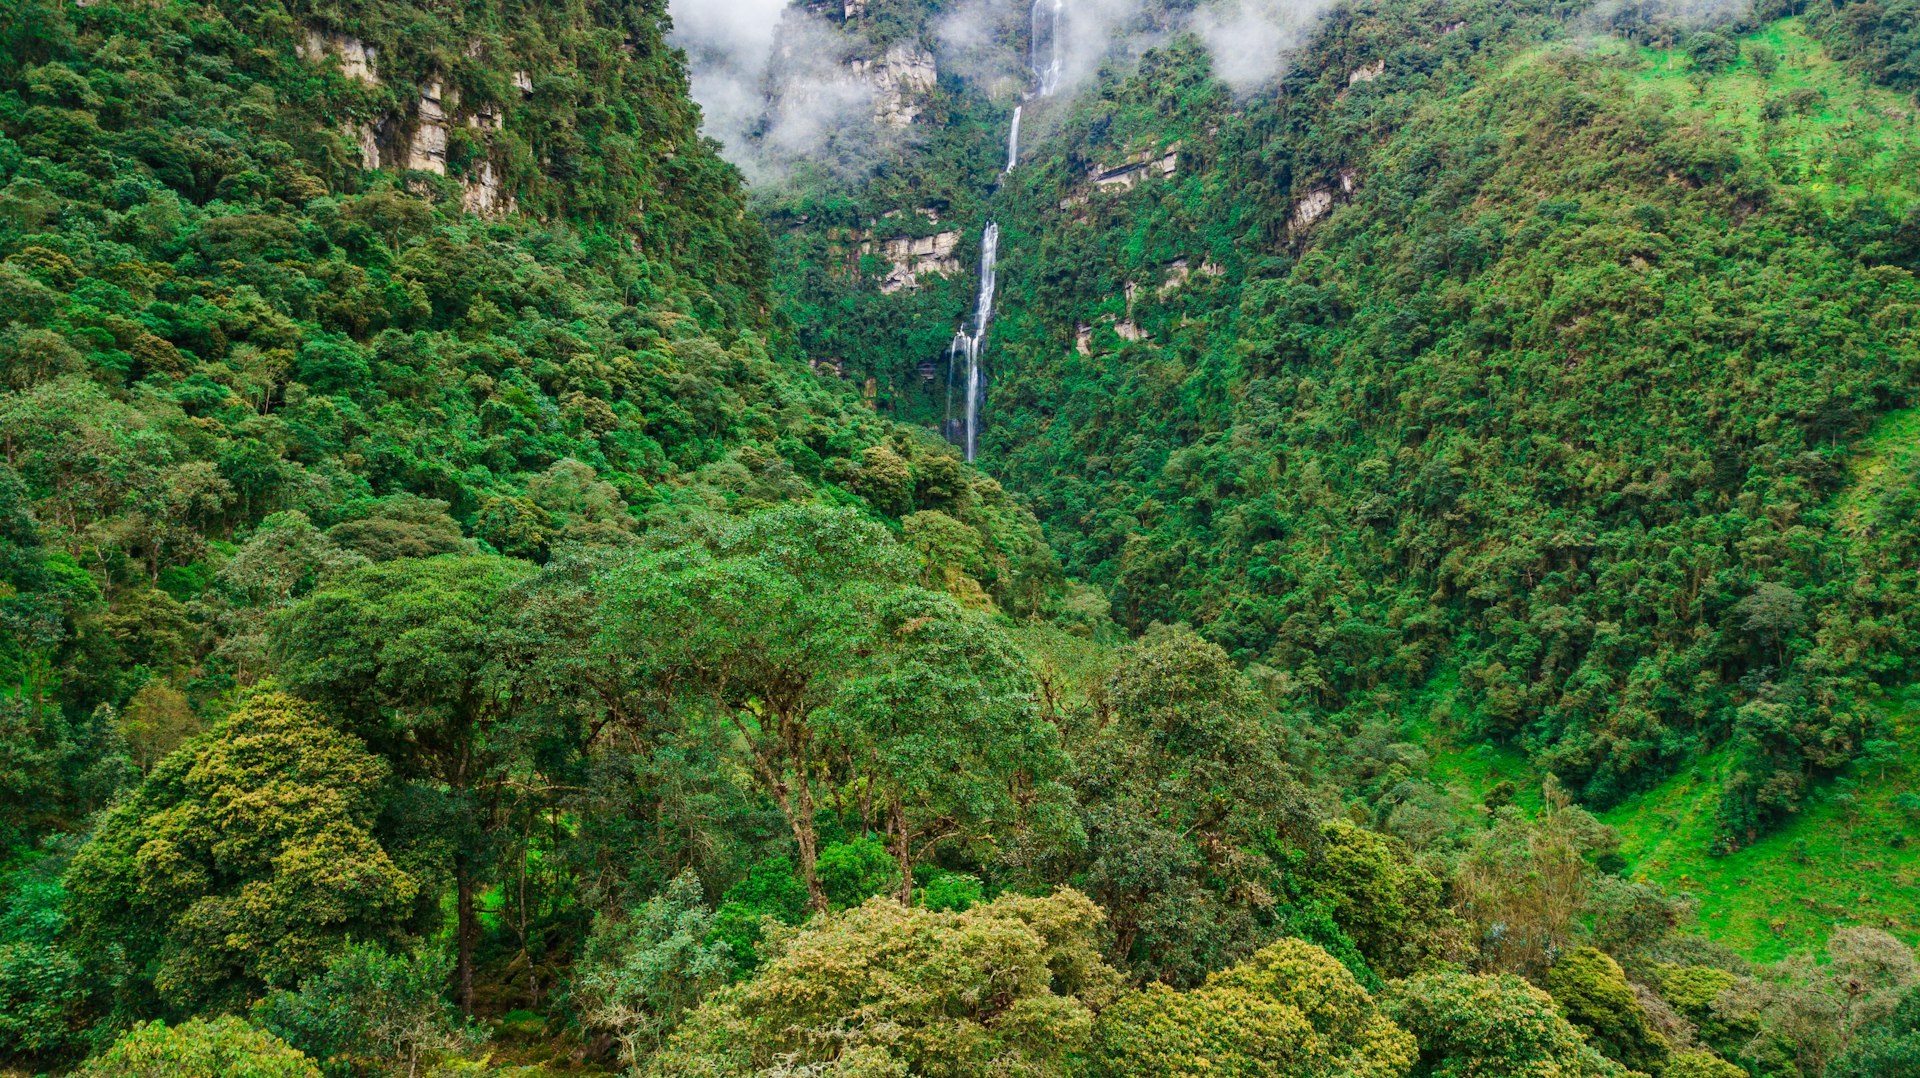 Cascada la Chorrera, Colombia's tallest waterfall.